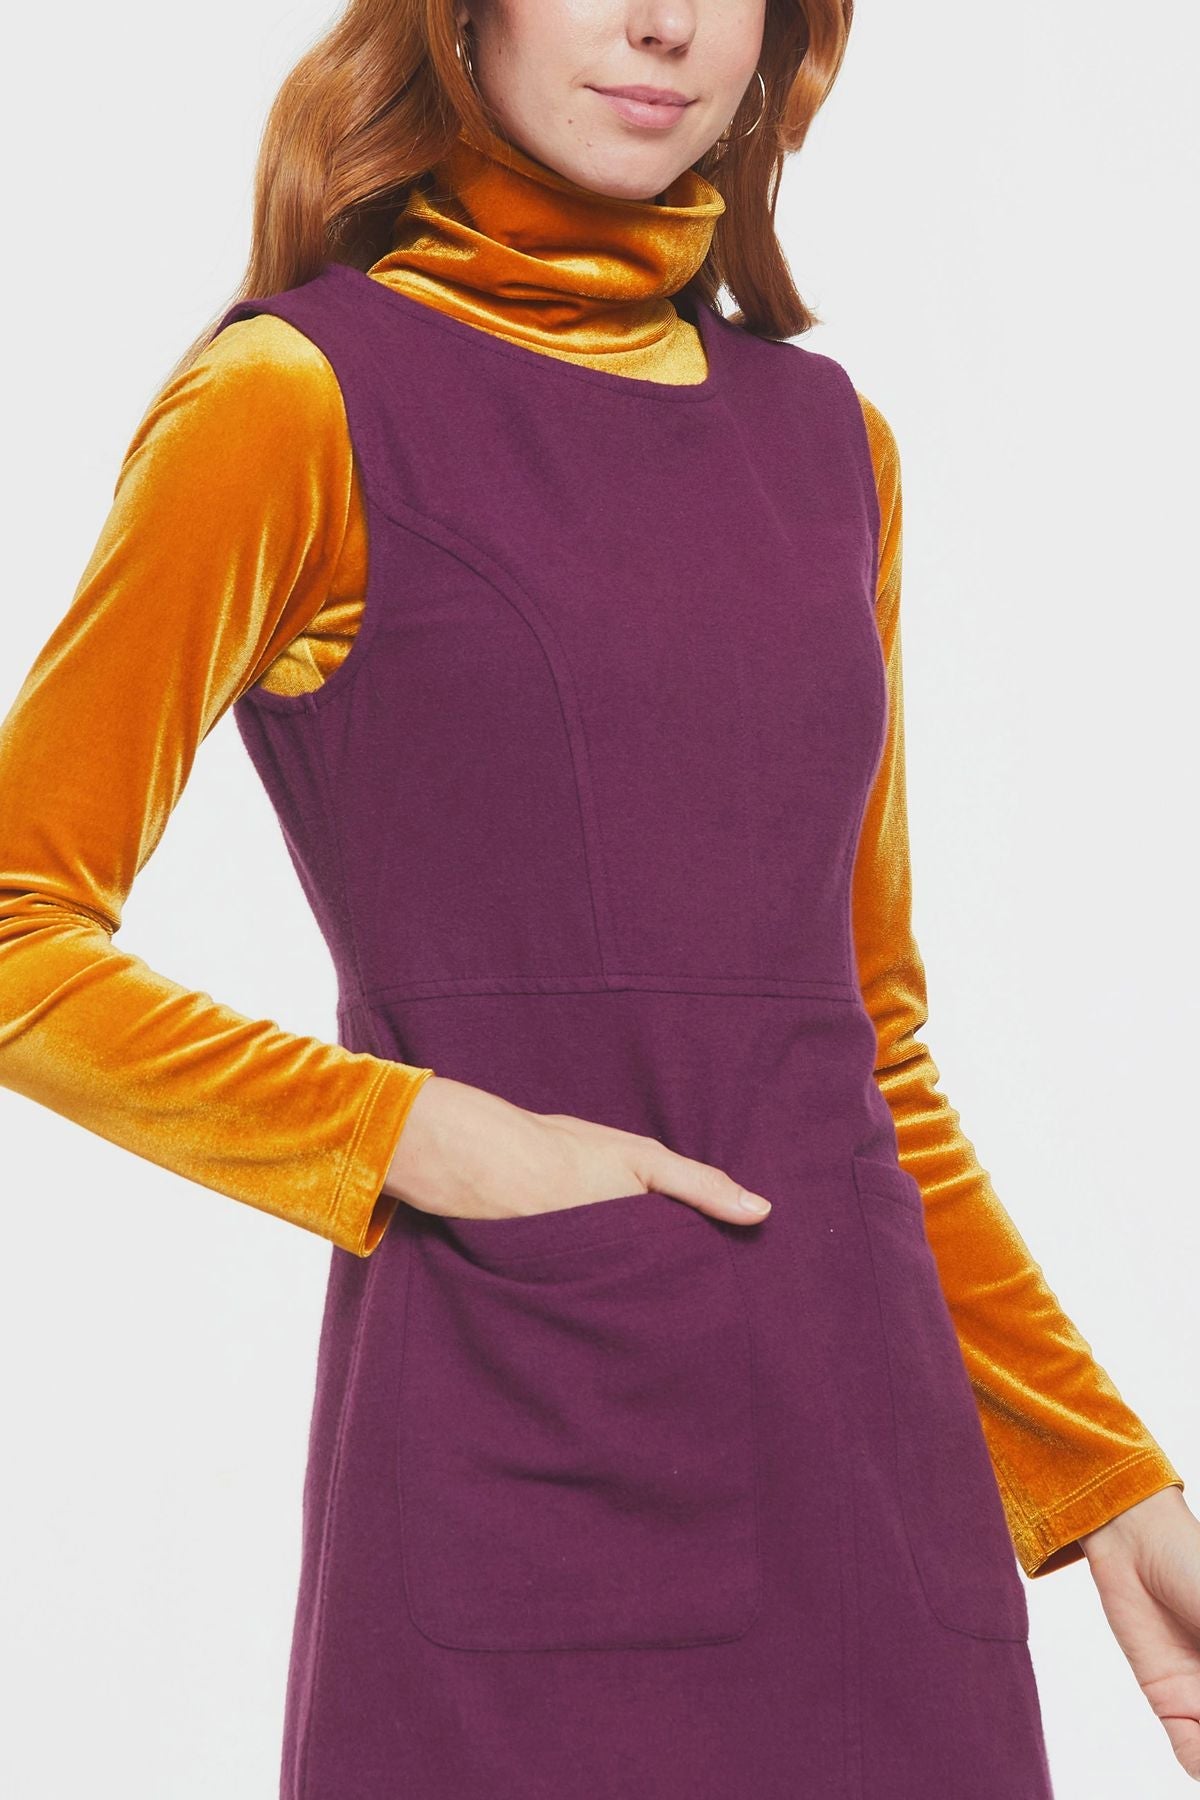 Short Cotton Sleeveless Dress Purple